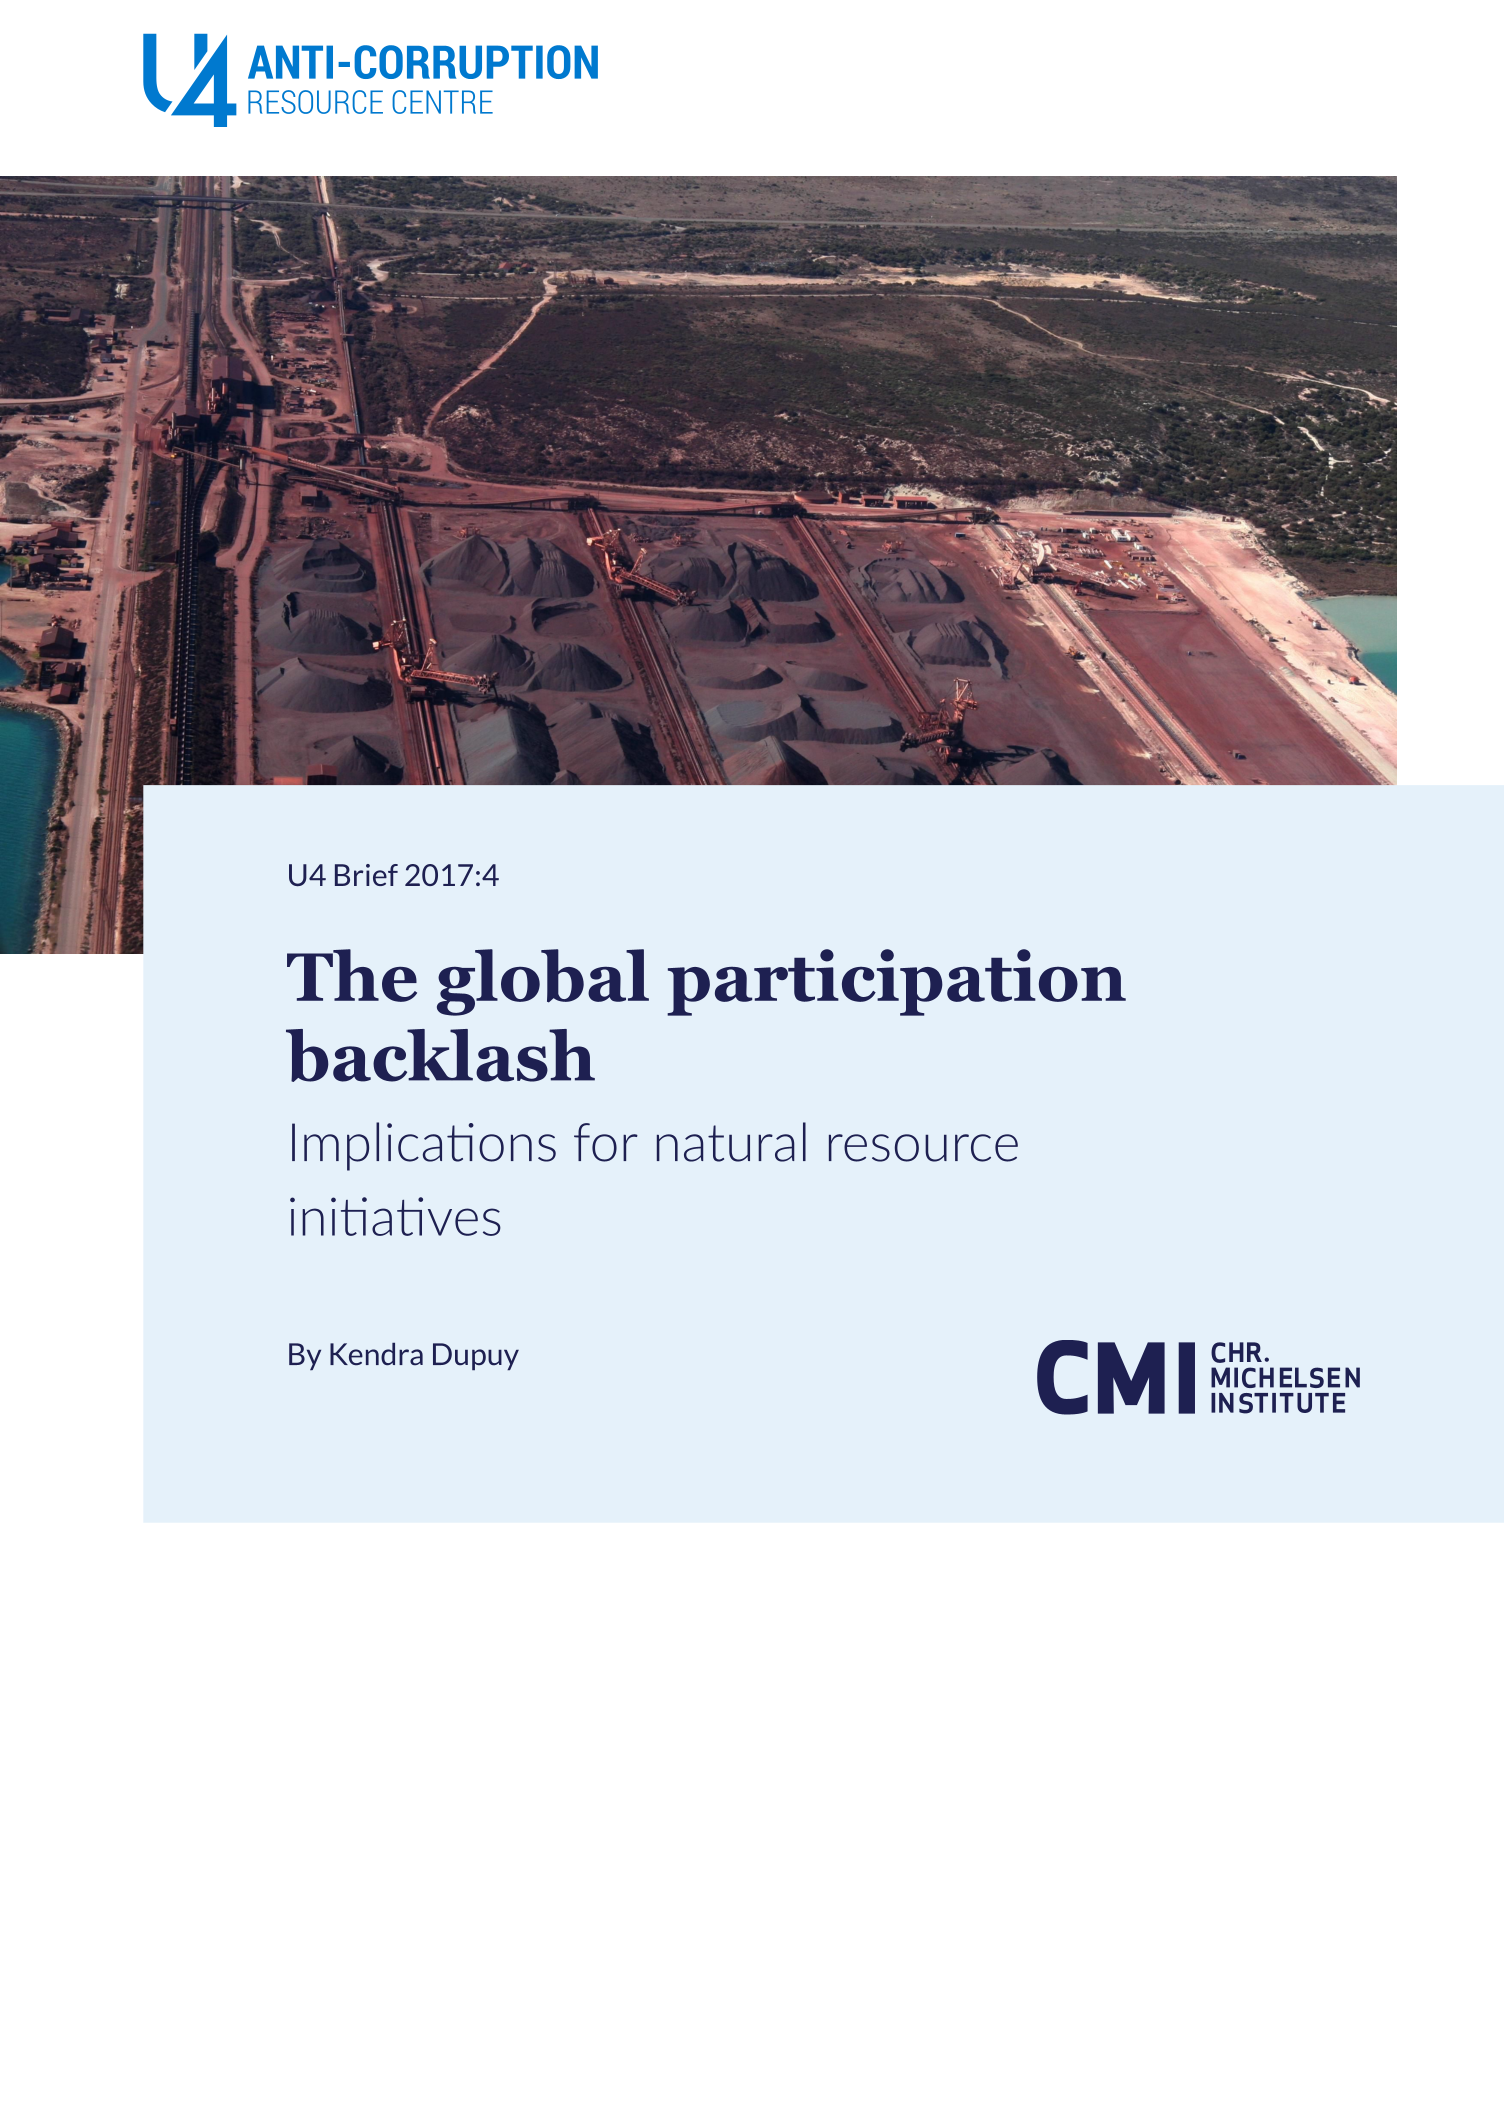 The global participation backlash